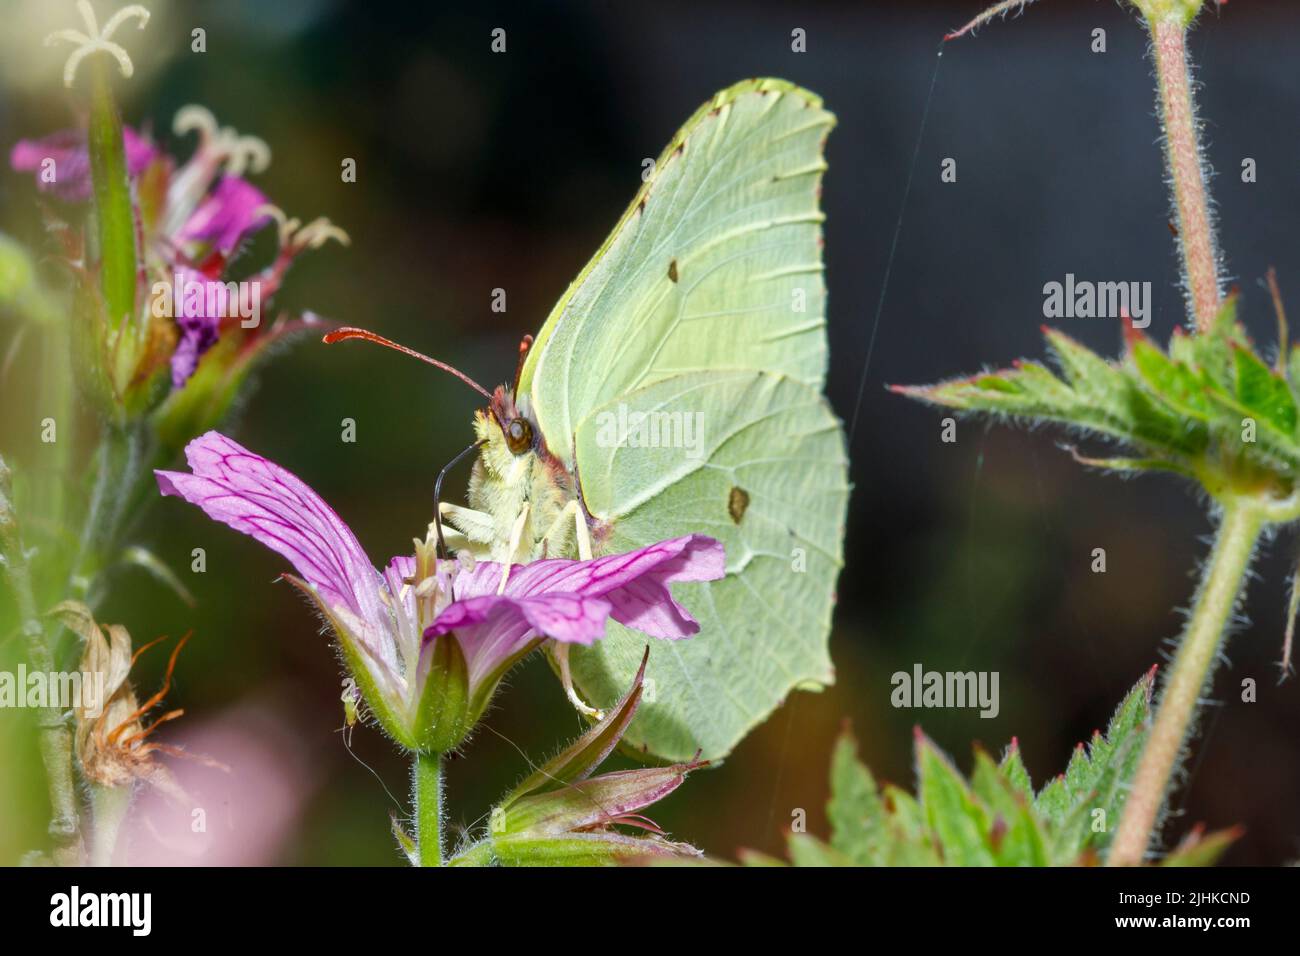 Brimstone butterfly (Gonepteryx rhamni) feeding on a flower in a Sussex garden, UK Stock Photo